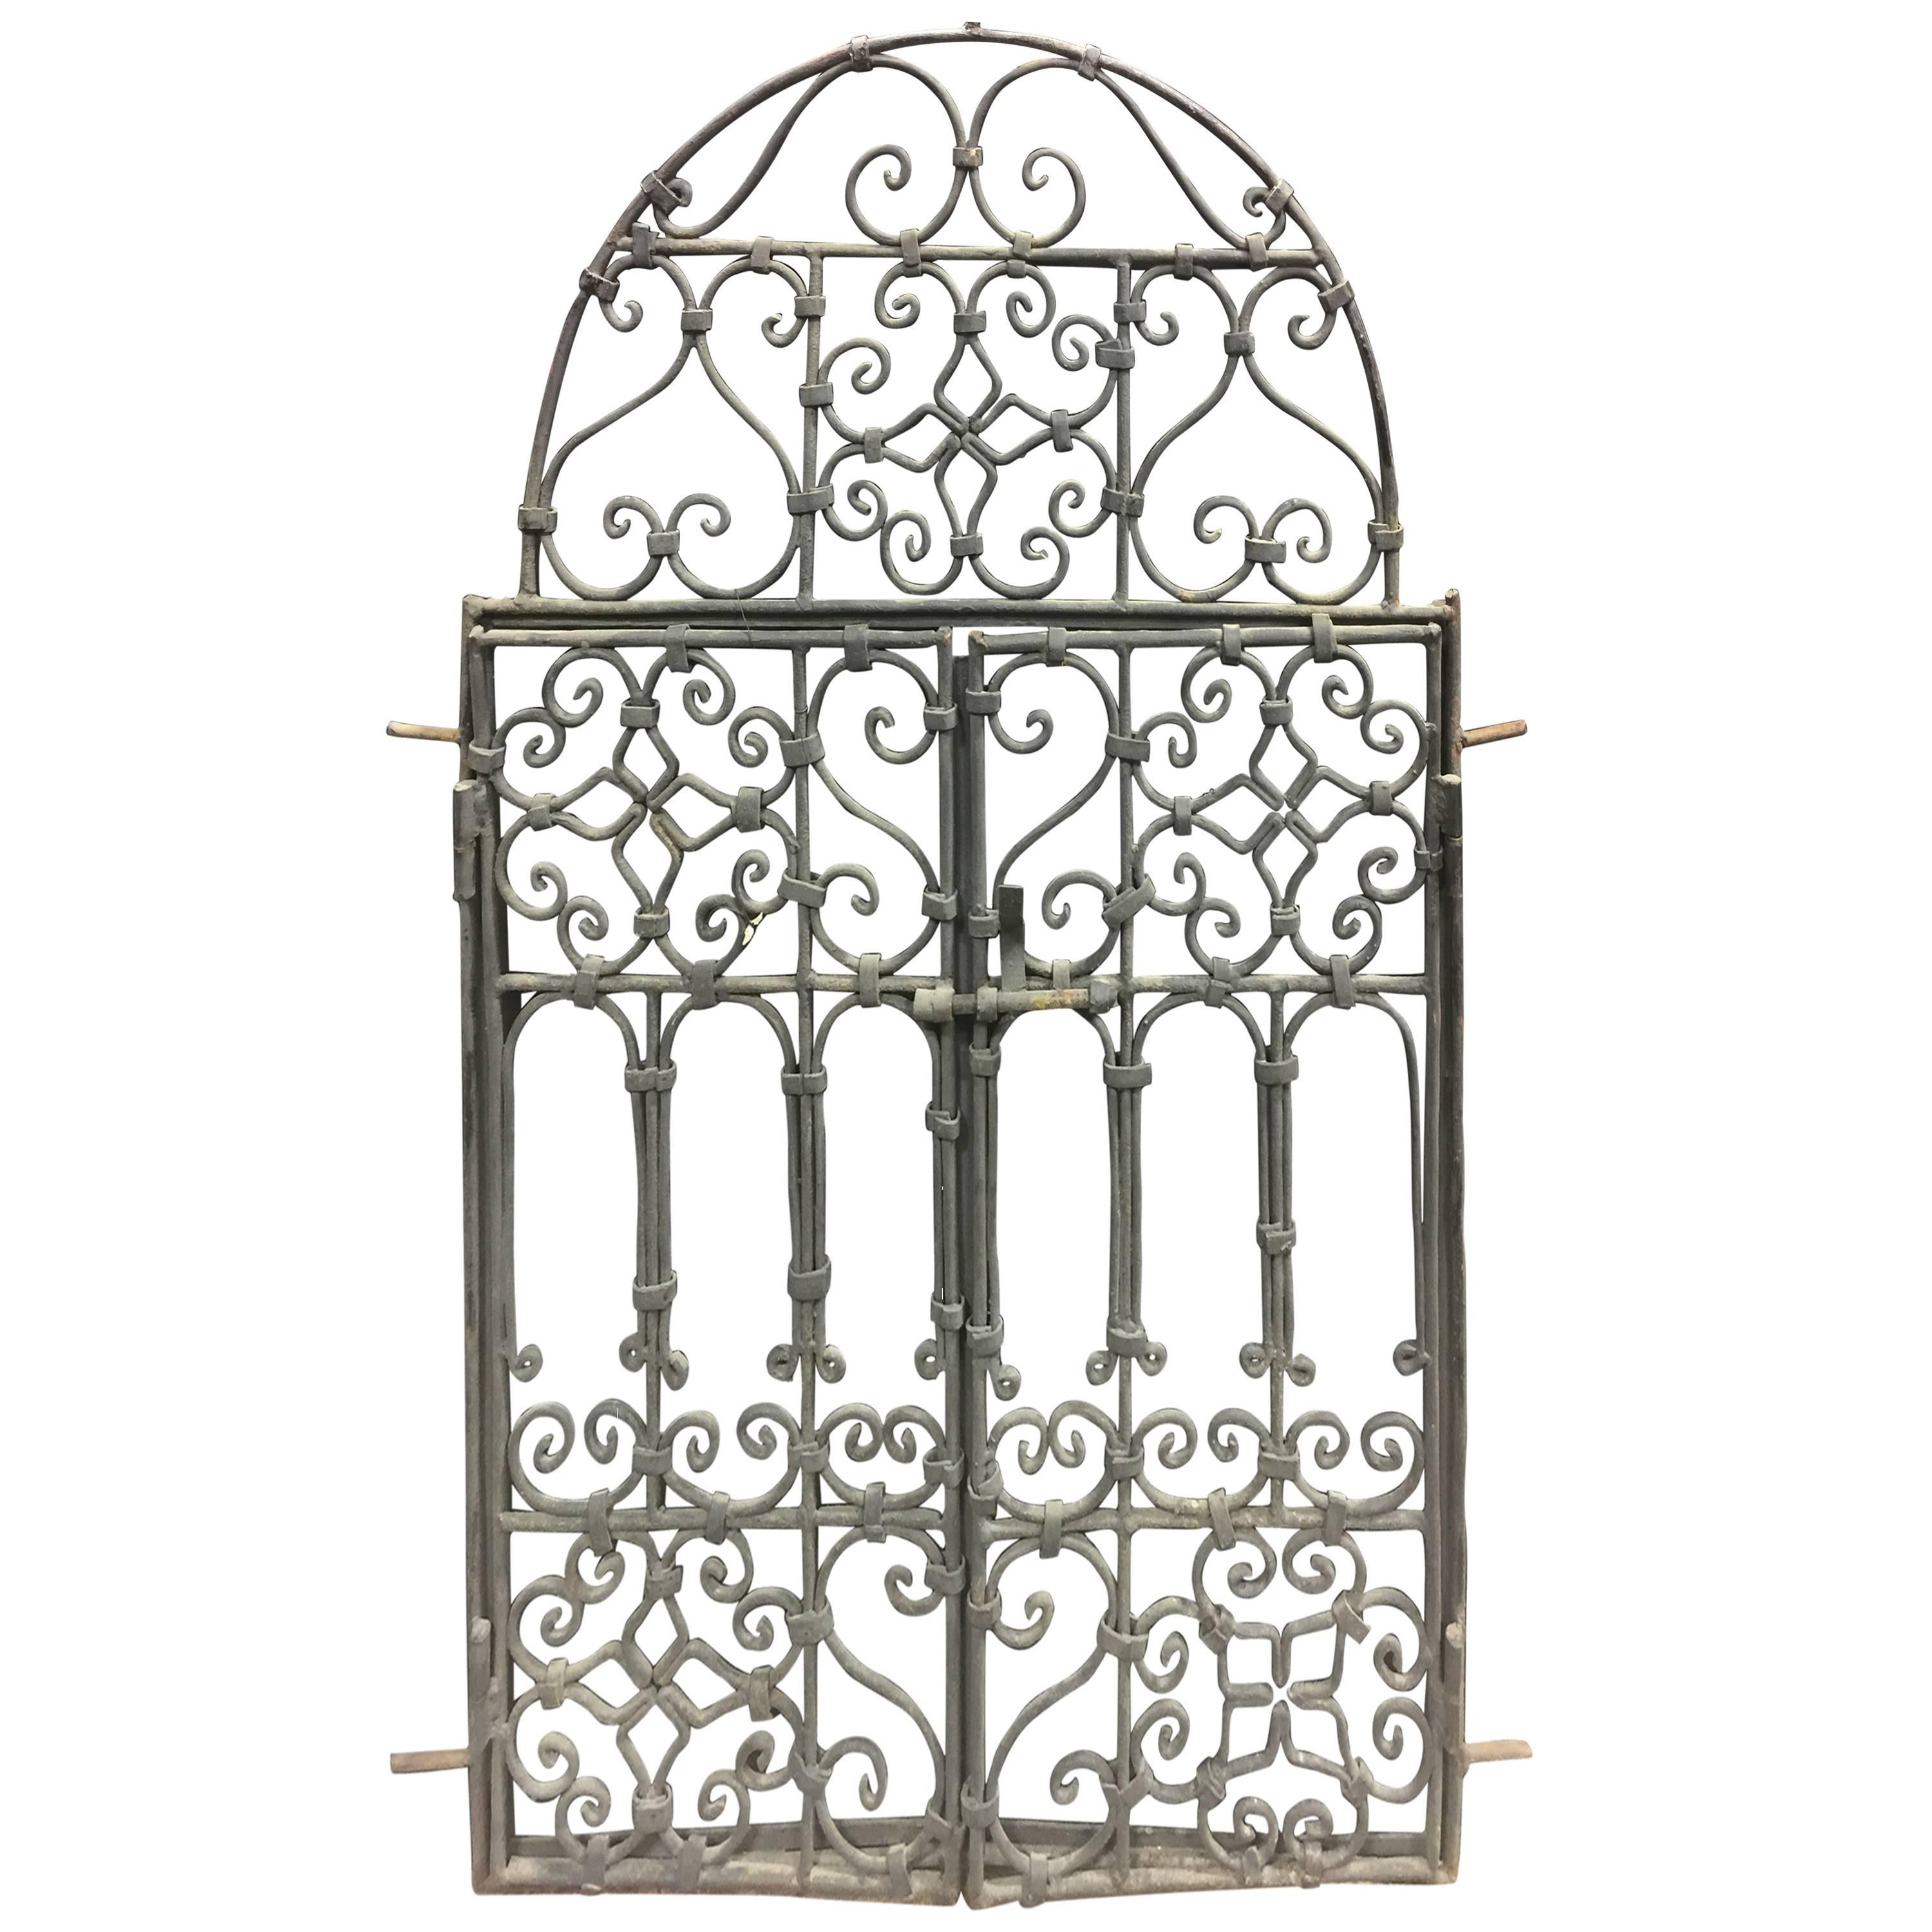 Late 19th Century French Iron Gates